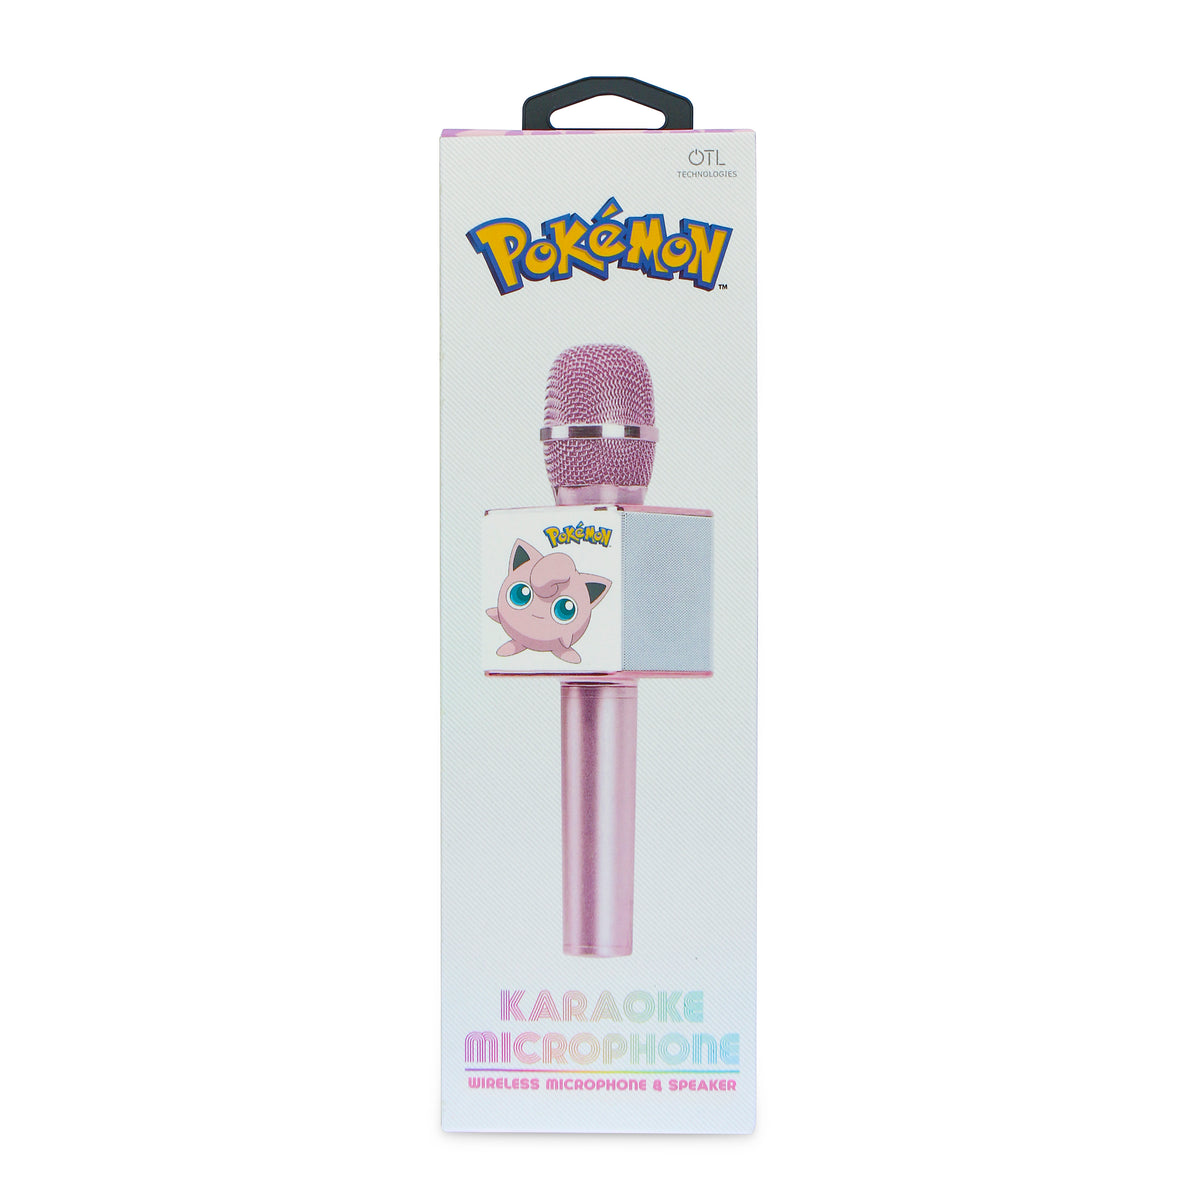 OTL Pokemon Jigglypuff Karaoke Microphone with Speaker - Pink | PK0895 from OTL - DID Electrical